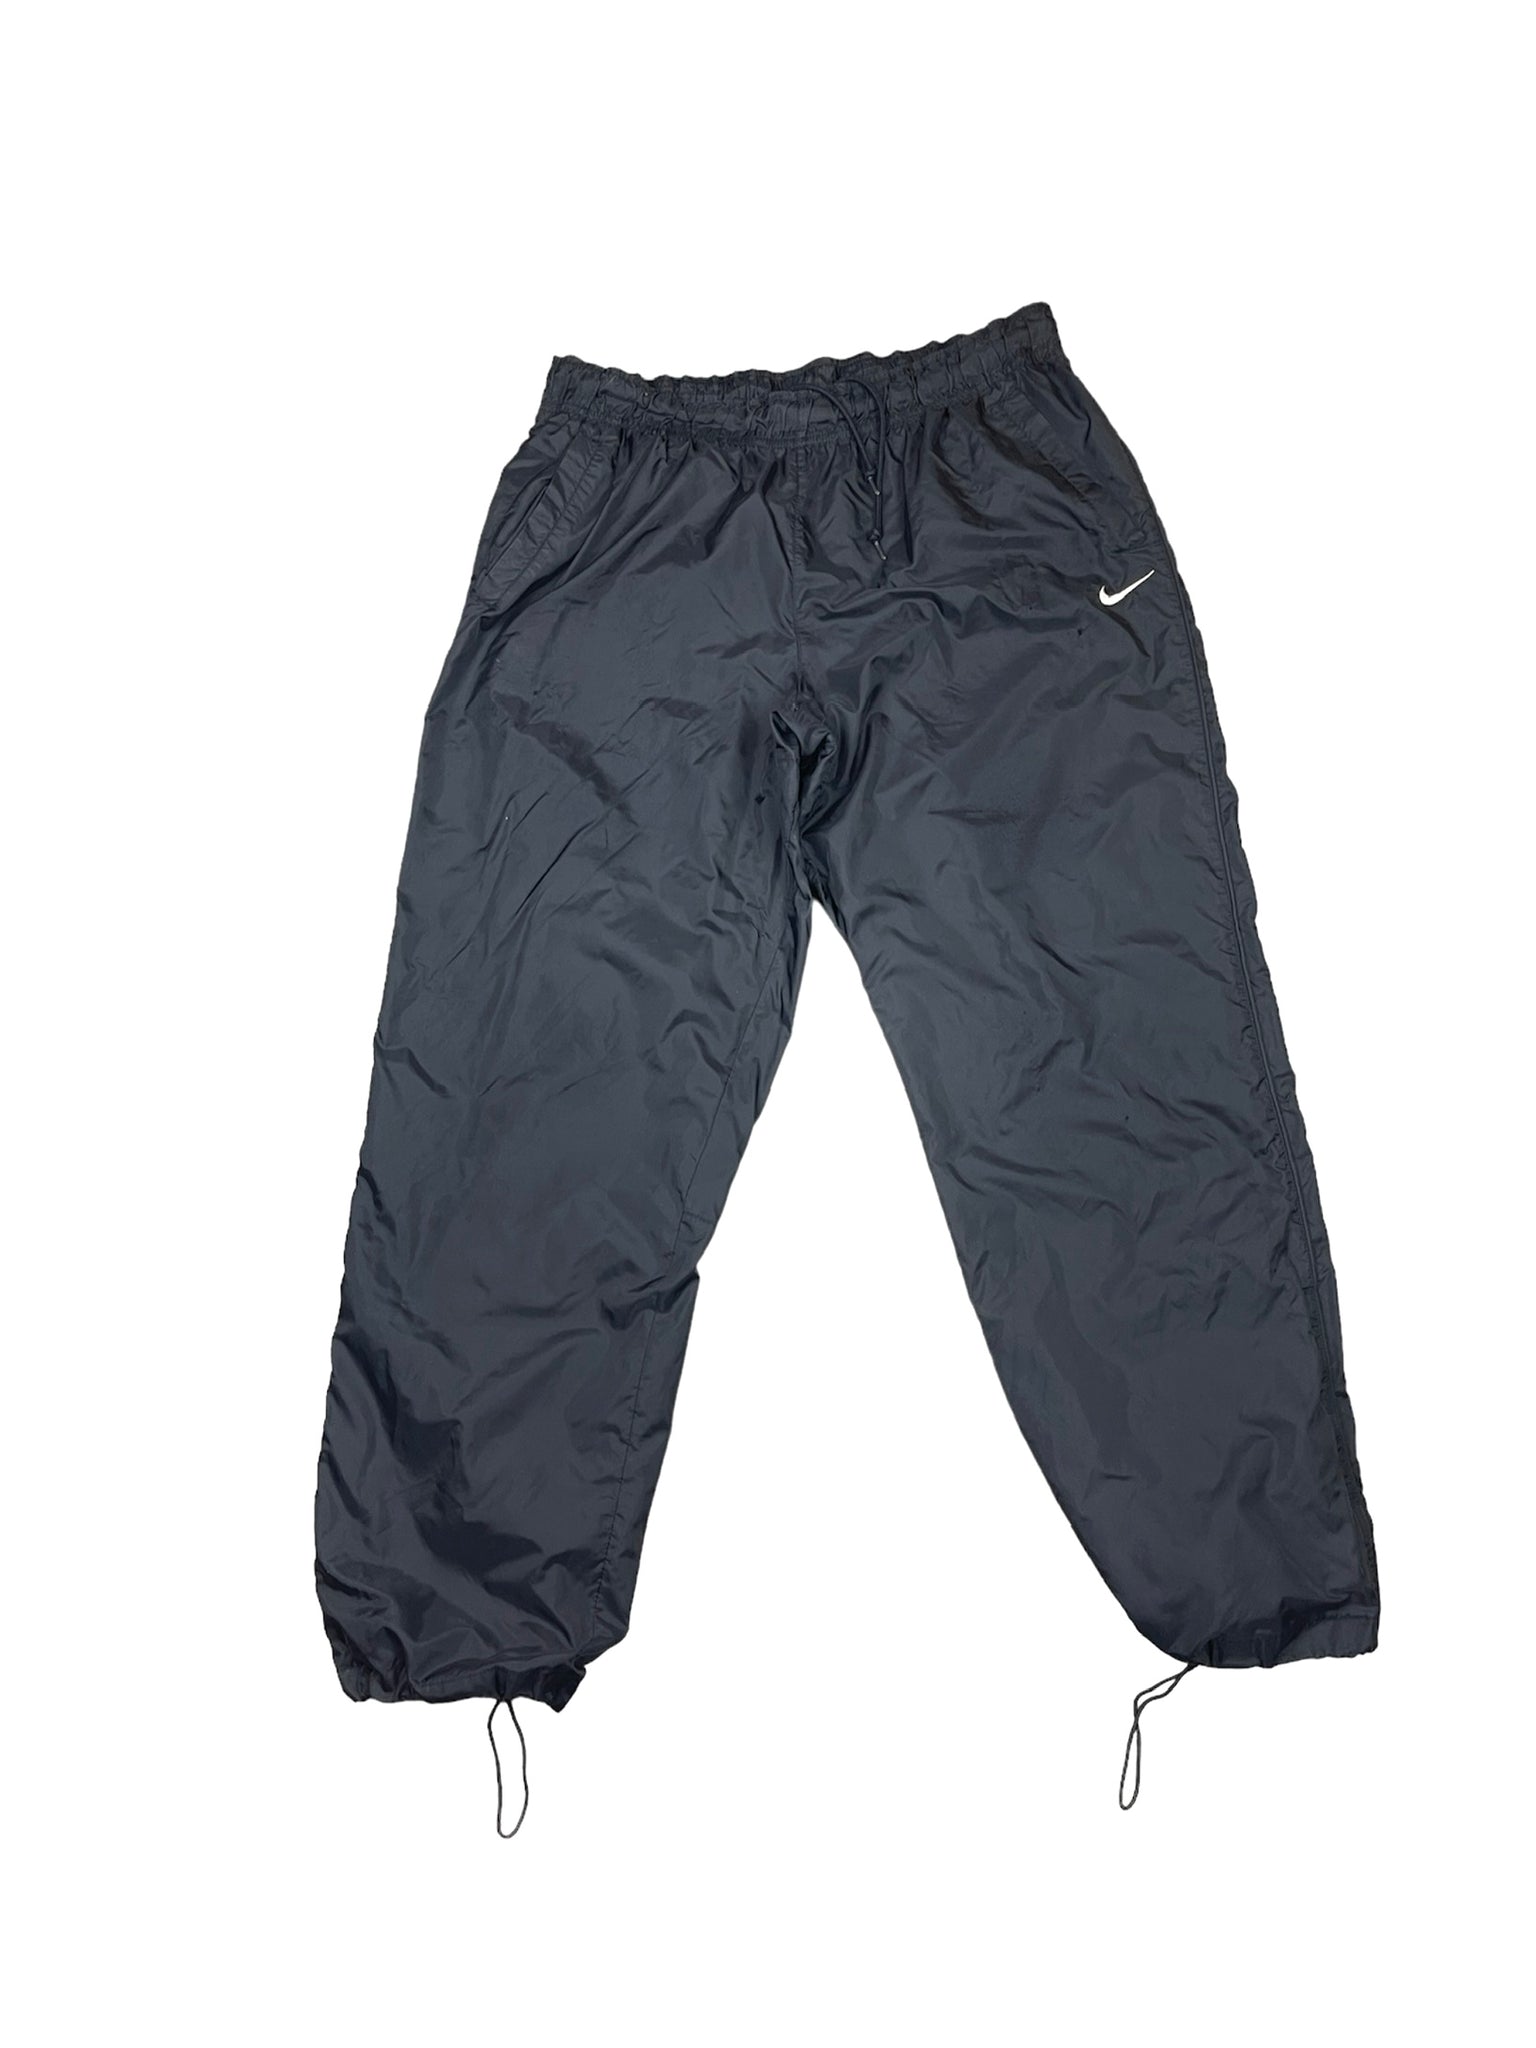 Nike Parachute Pants Men